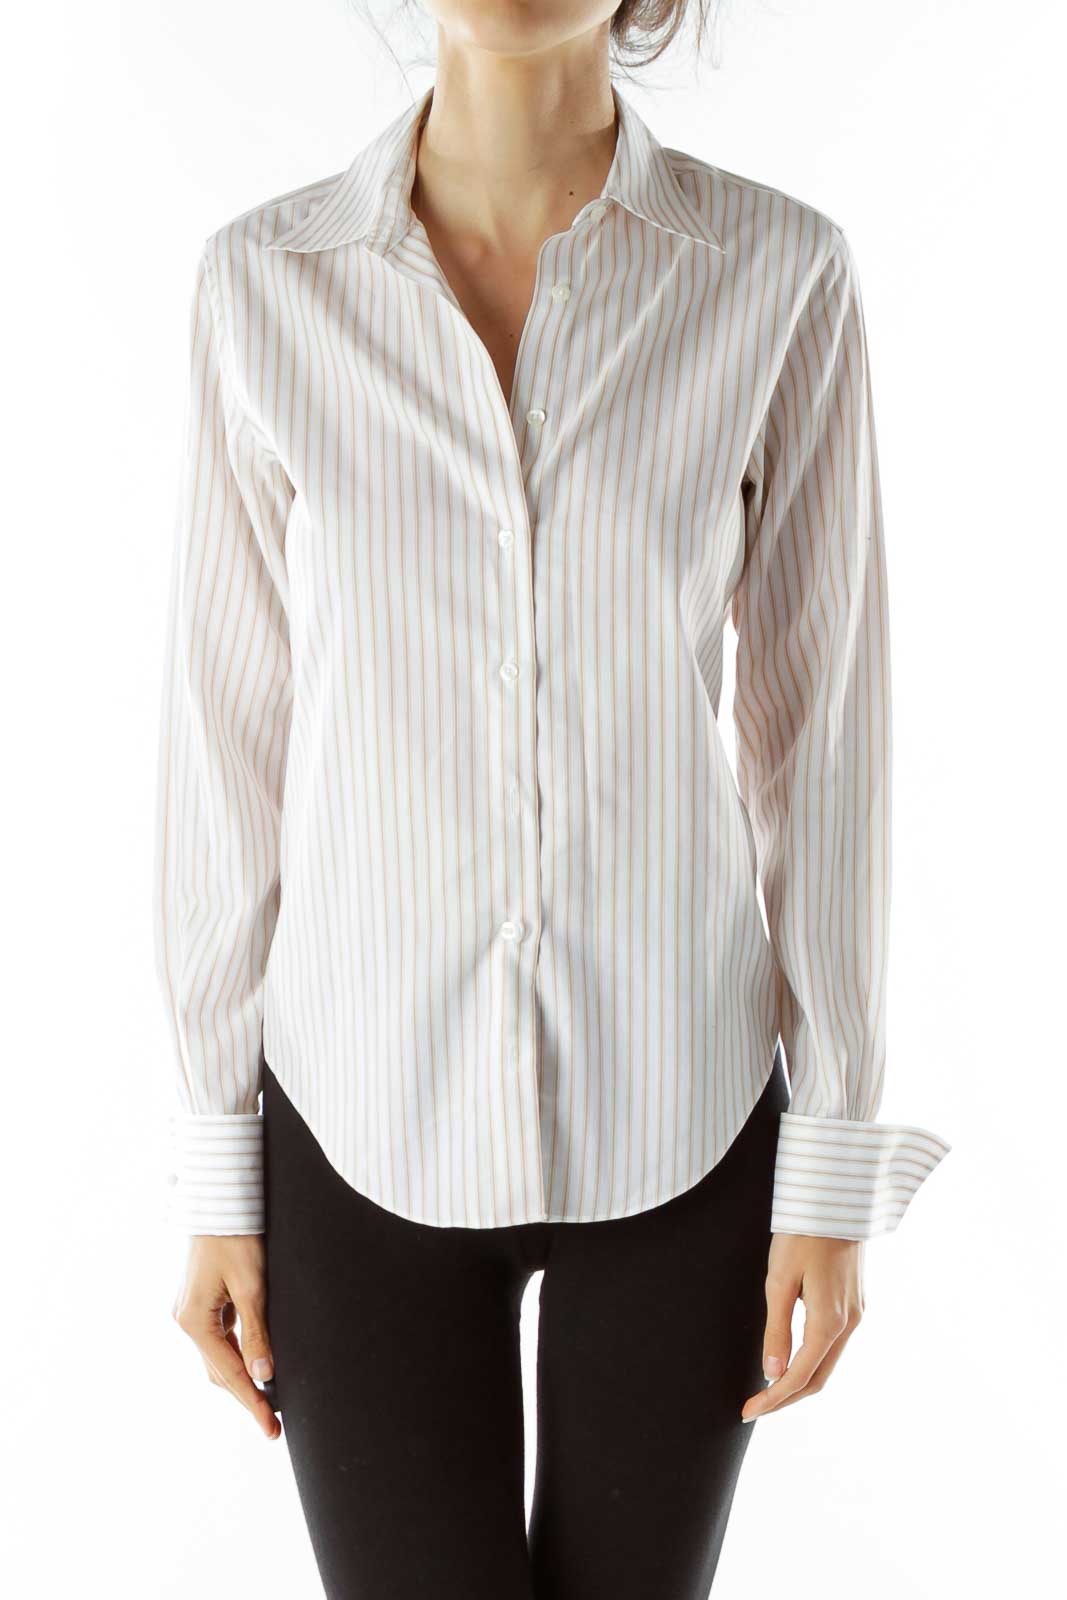 White Beige Striped Shirt Front